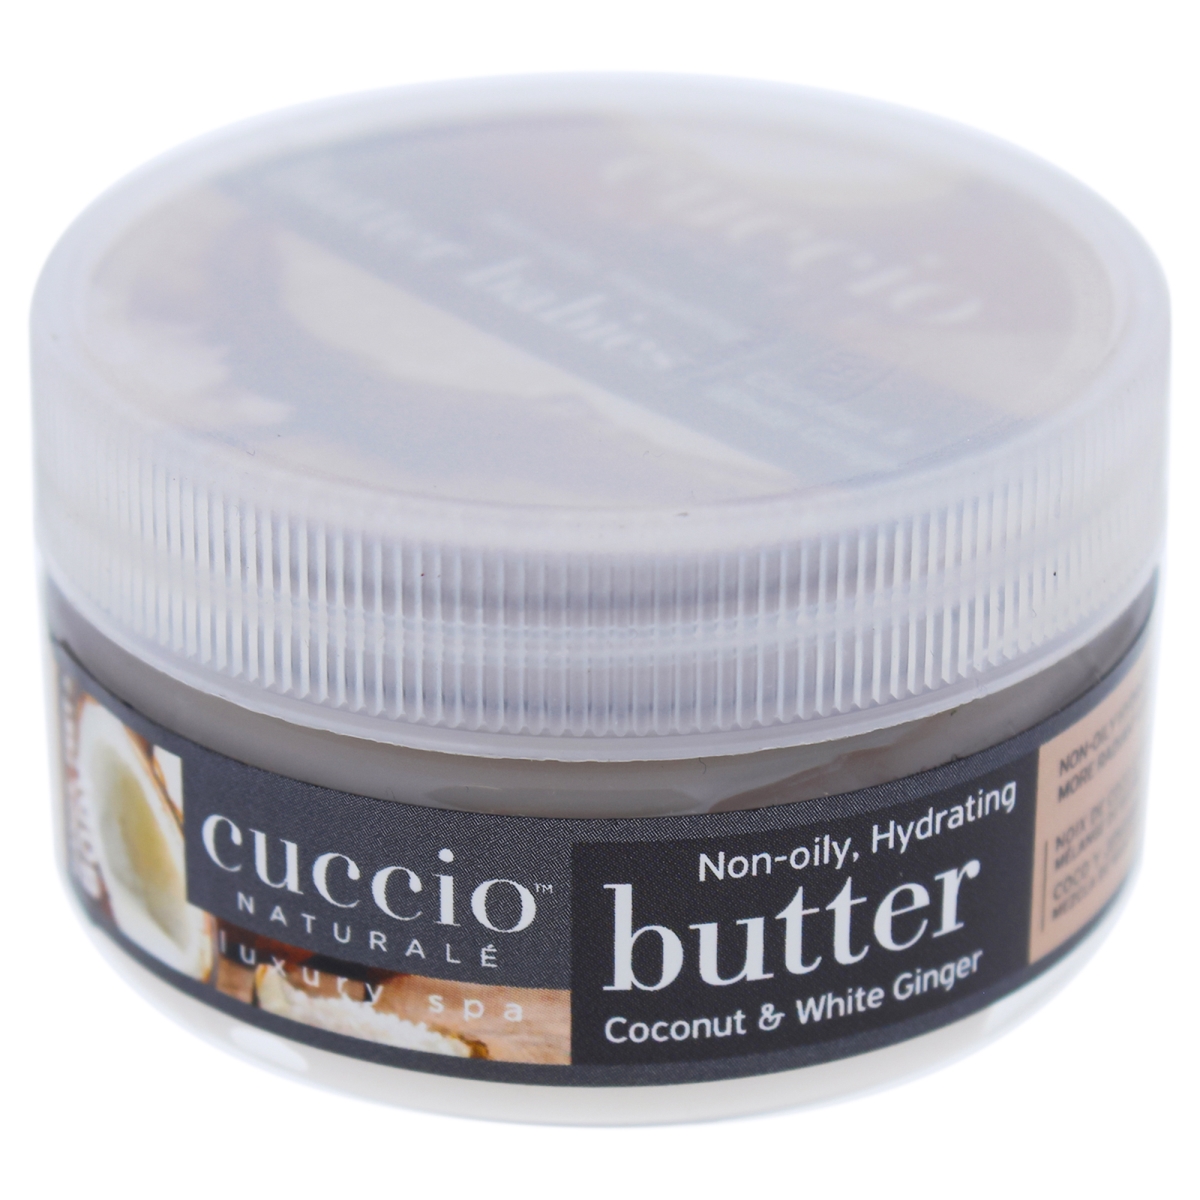 I0090878 Butter Babies Body Lotion For Unisex - Coconut & White Ginger - 1.5 Oz